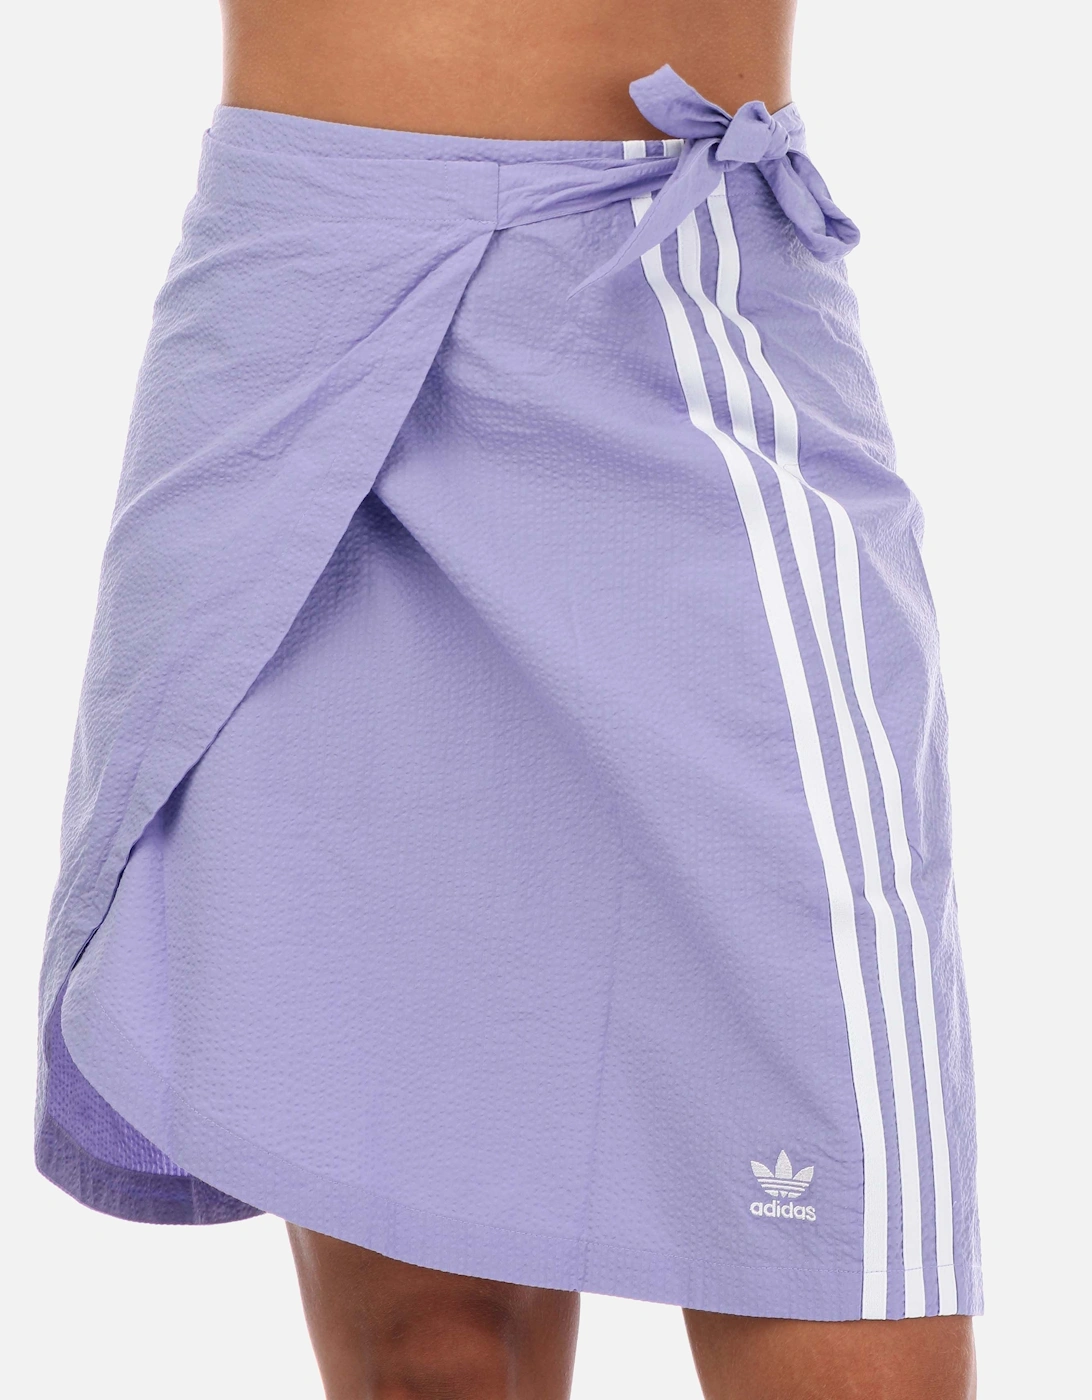 Adidas Originals Women's Womens Tie Skirt - Purple - Size: 14/None